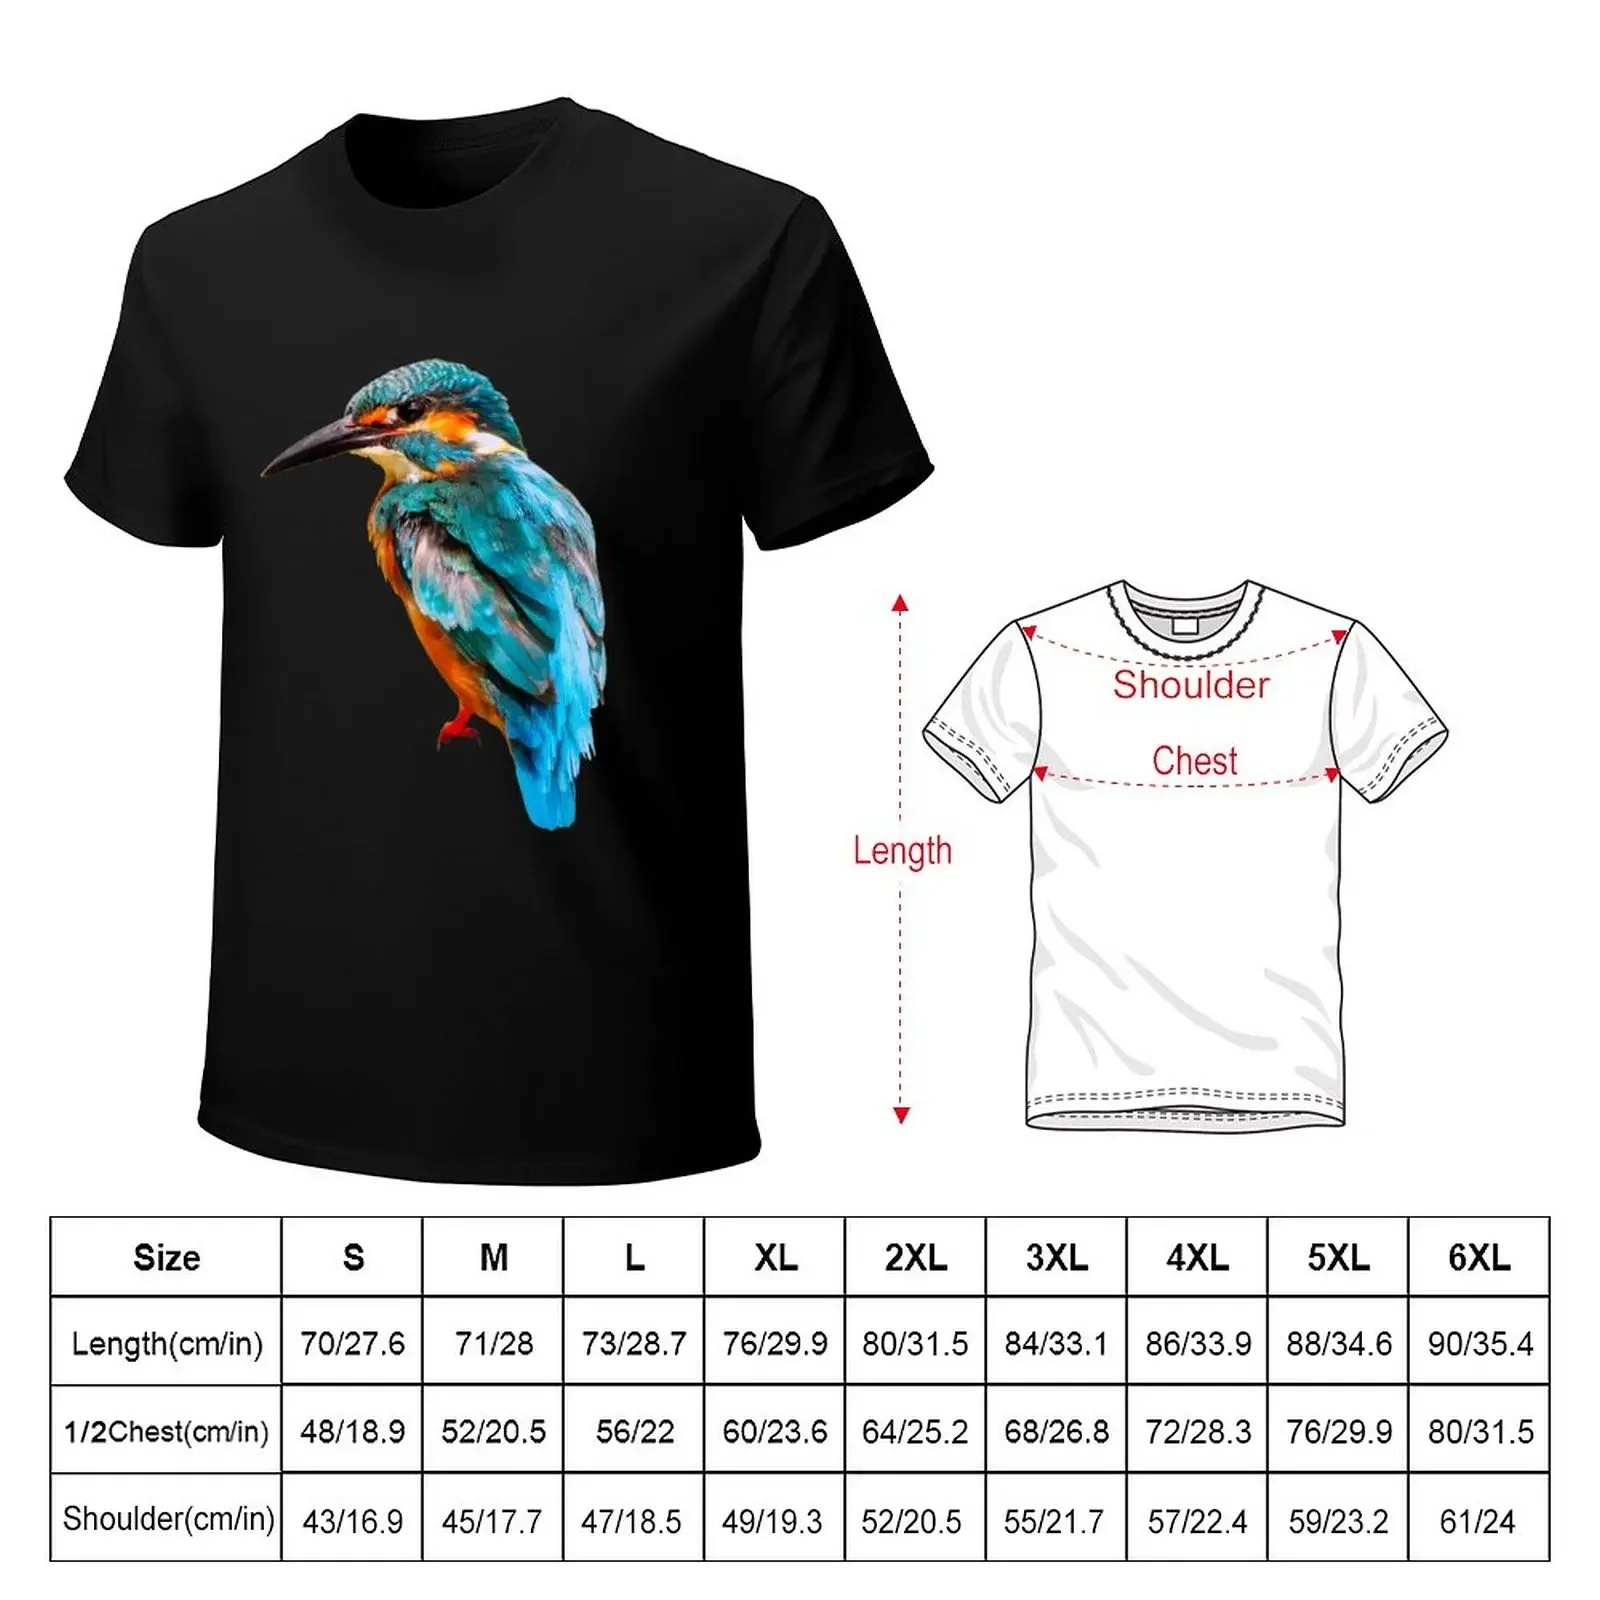 Kingfisher 귀여운 상의, 소년 흰색 동물 프린트, 남성 티셔츠, 캐주얼 스타일리시